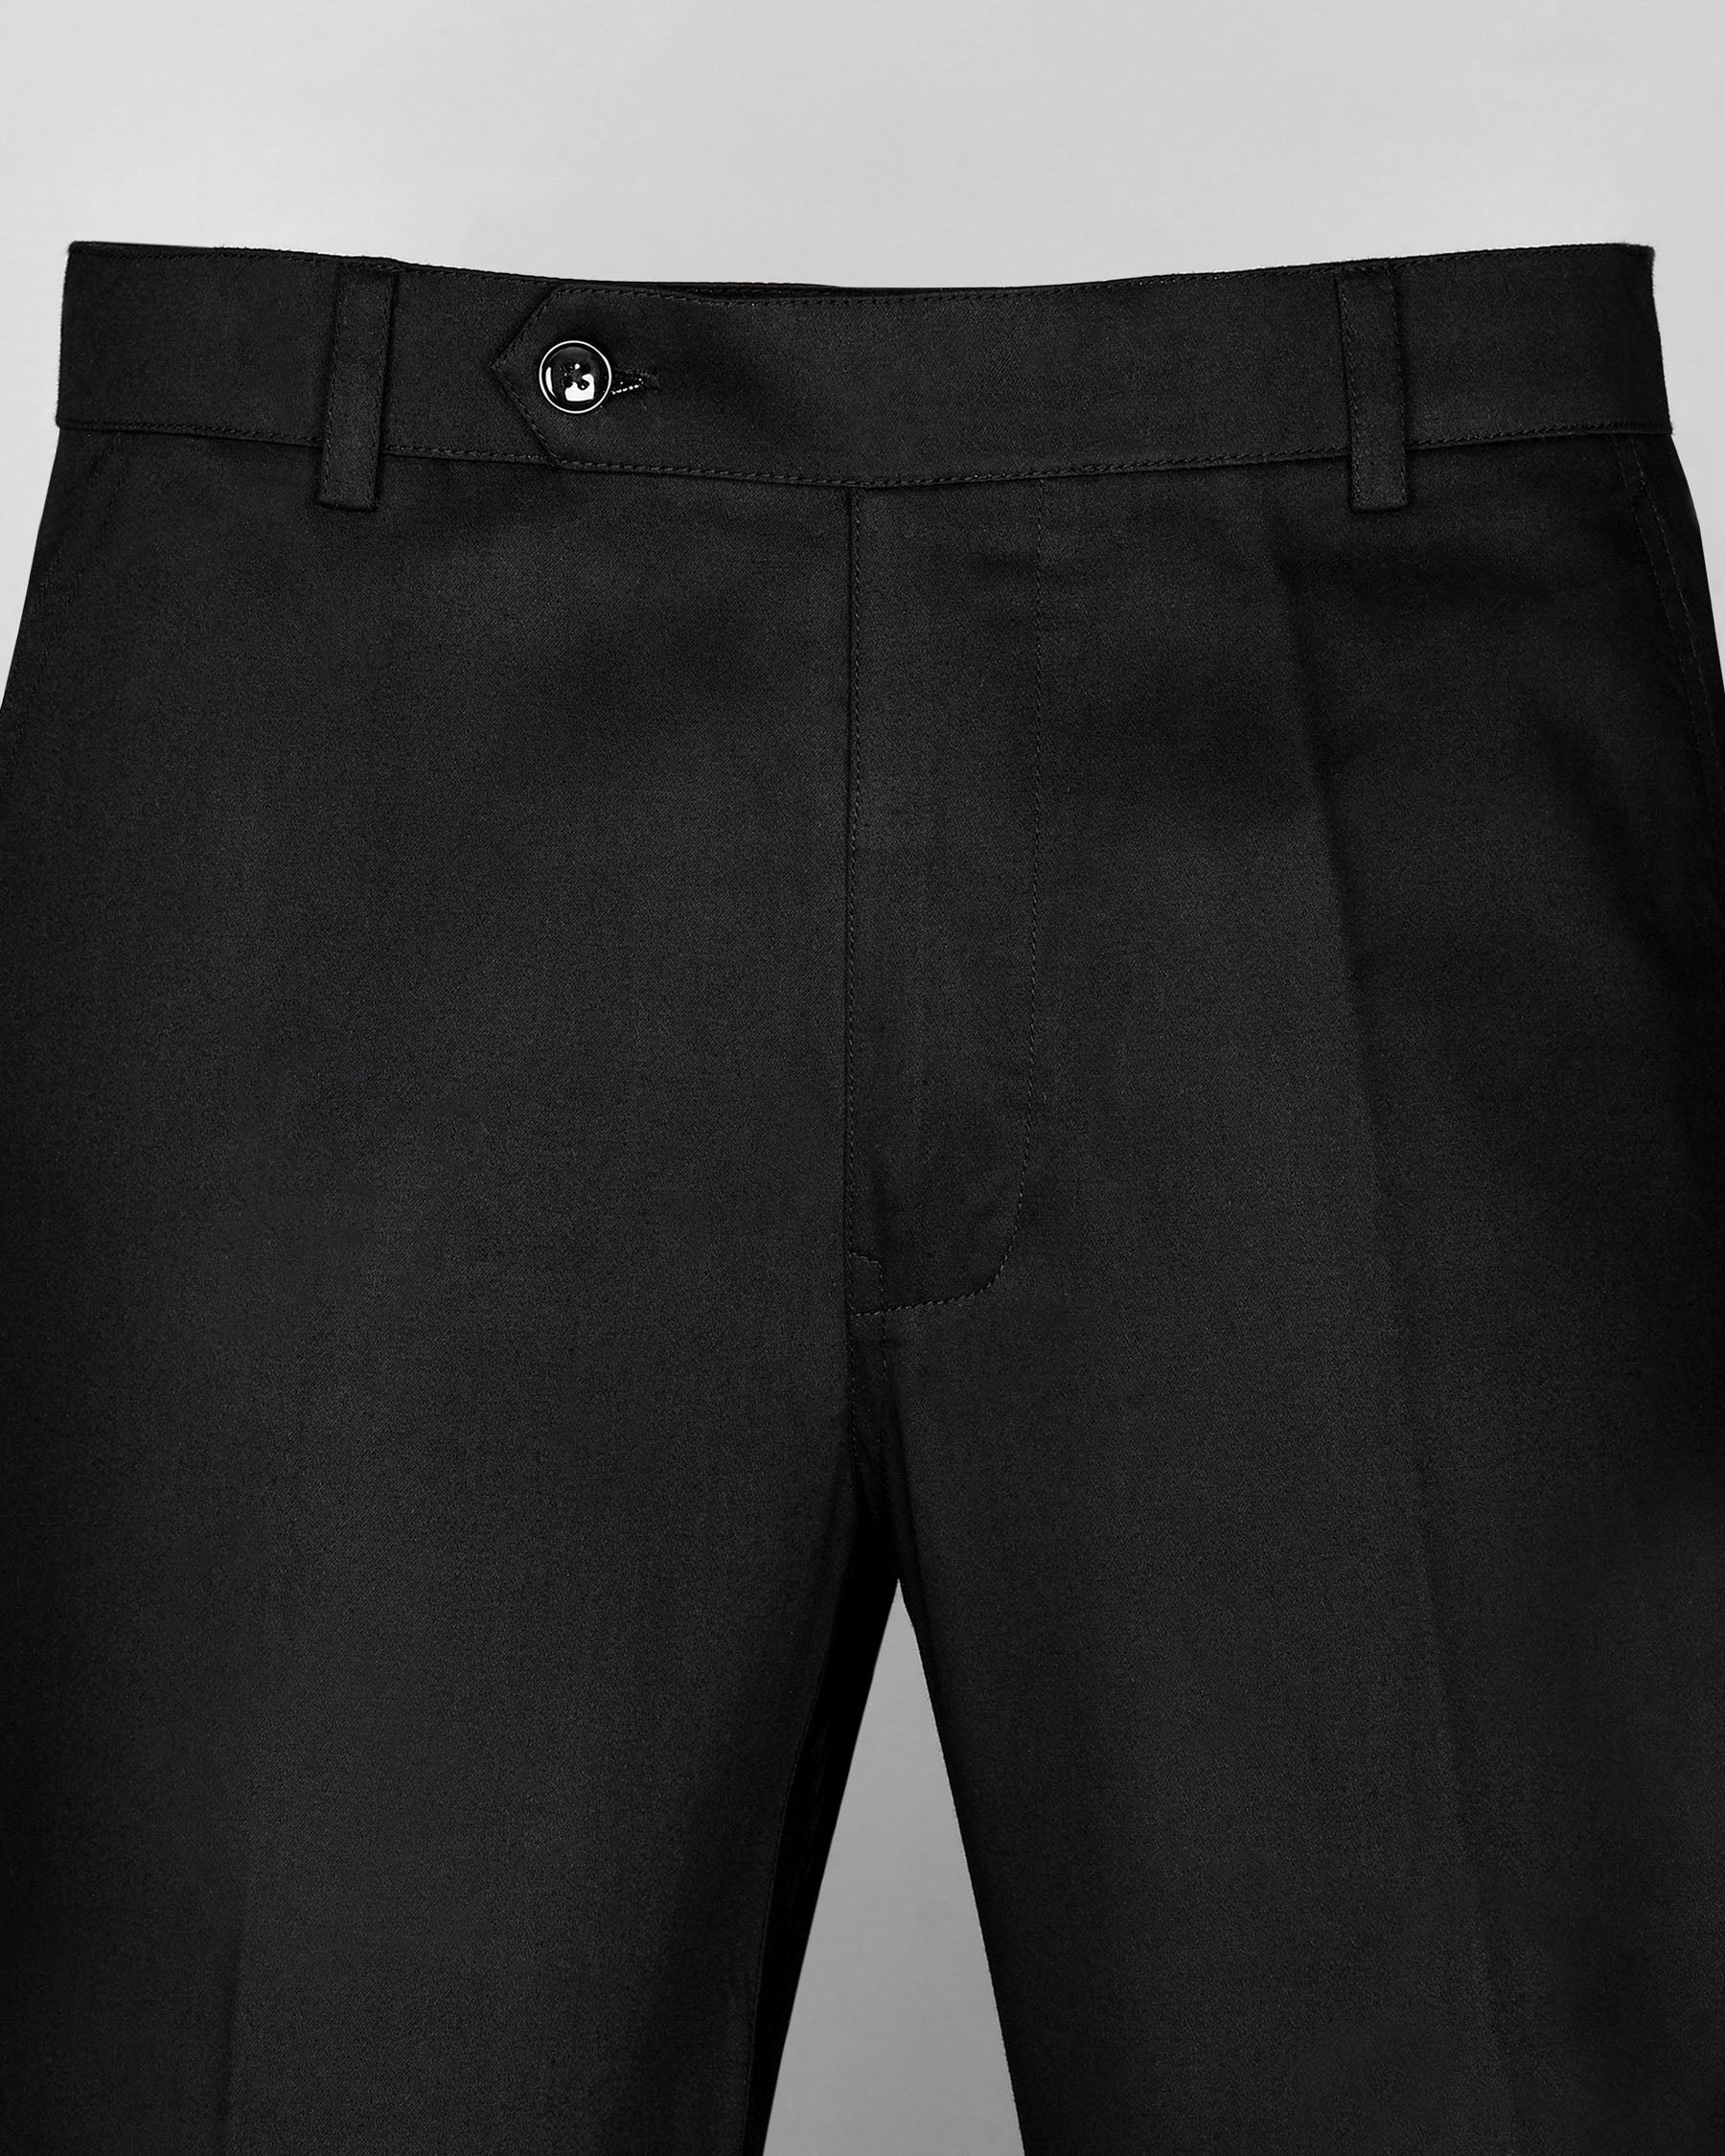 St. John Sport Black Cotton Sateen Pants sz 2